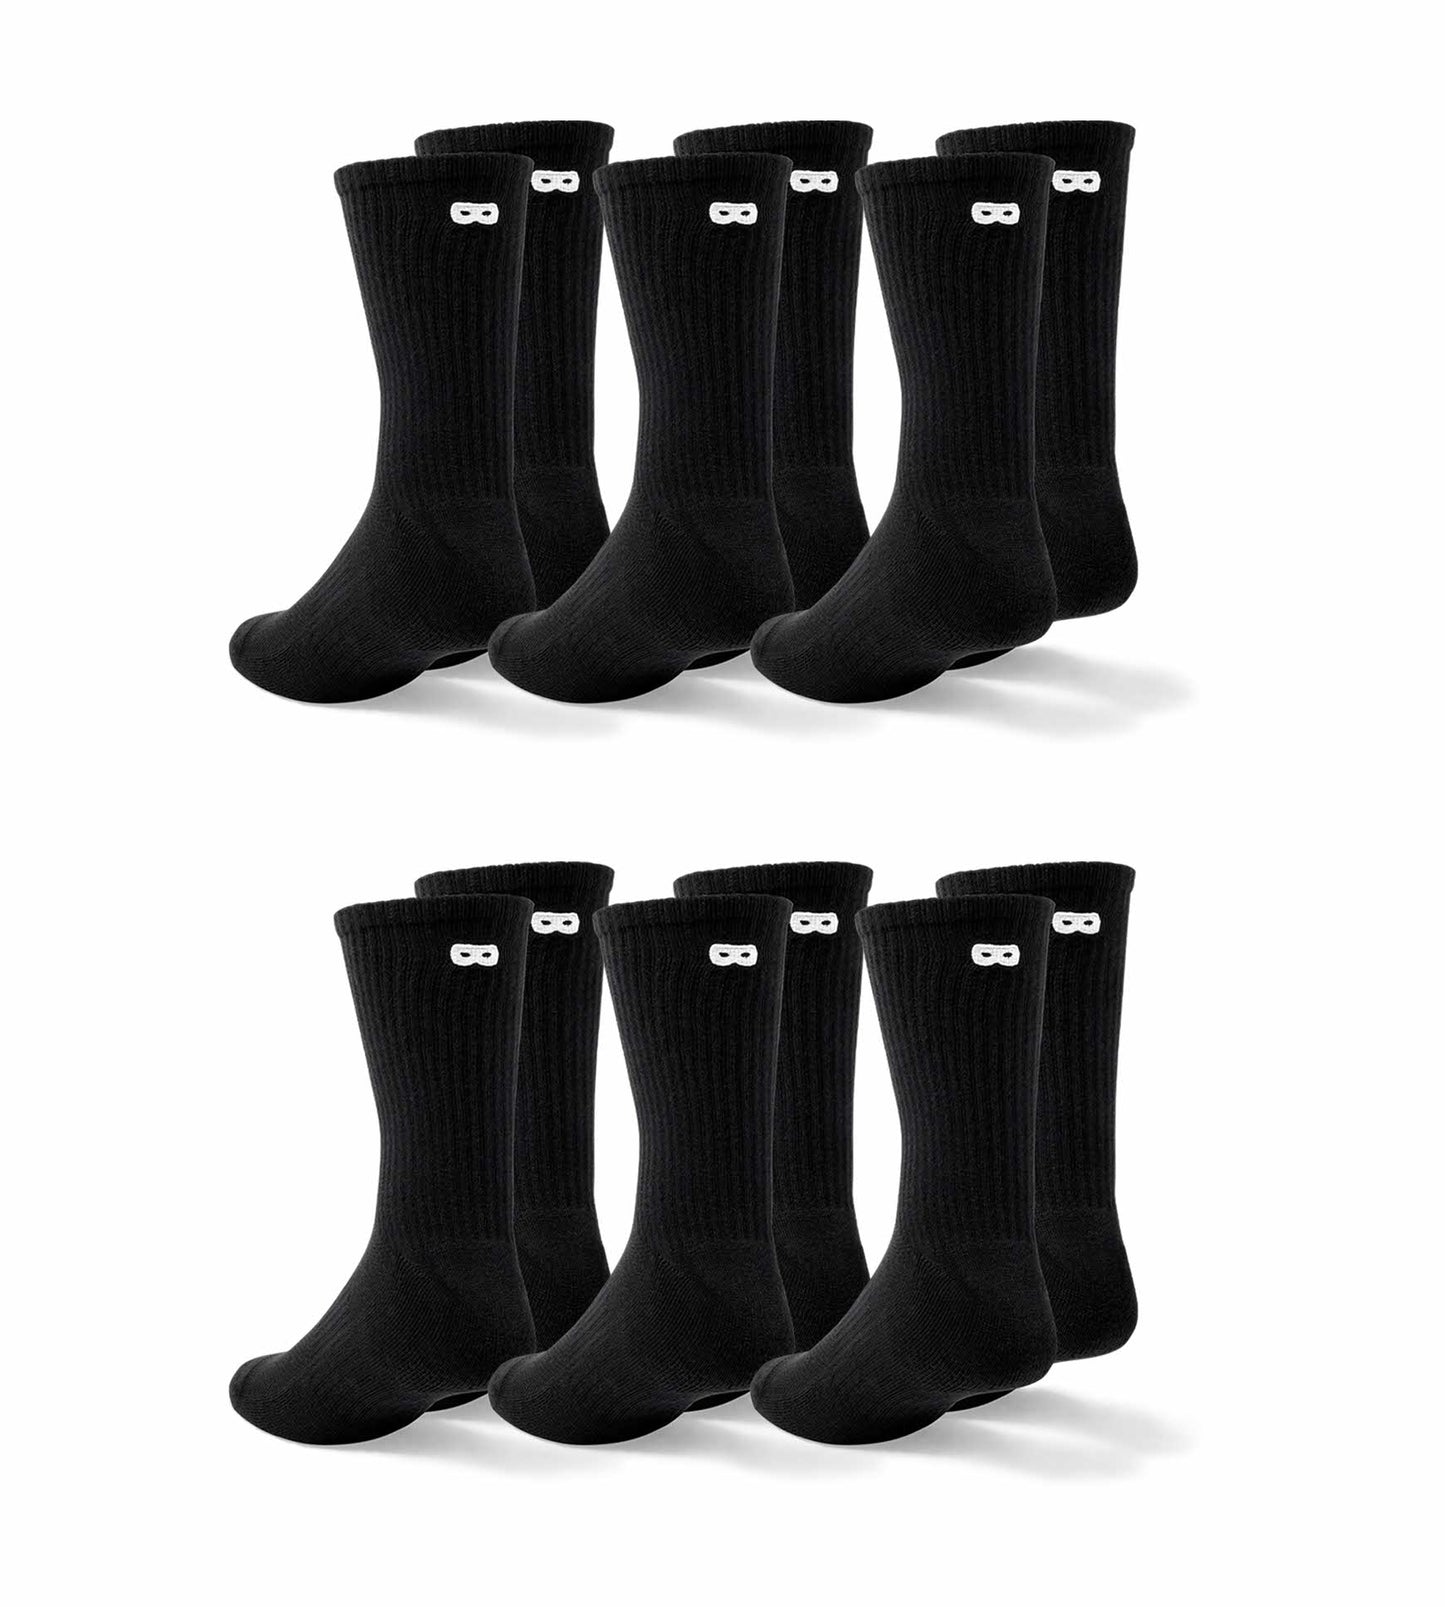 Bowo IV - Cushion Crew Socks 6 Pack colors contain: White, Black, Silver, Dark slate gray, Black, Gains boro, Dark slate gray, Dark Gray, Black, Dim gray